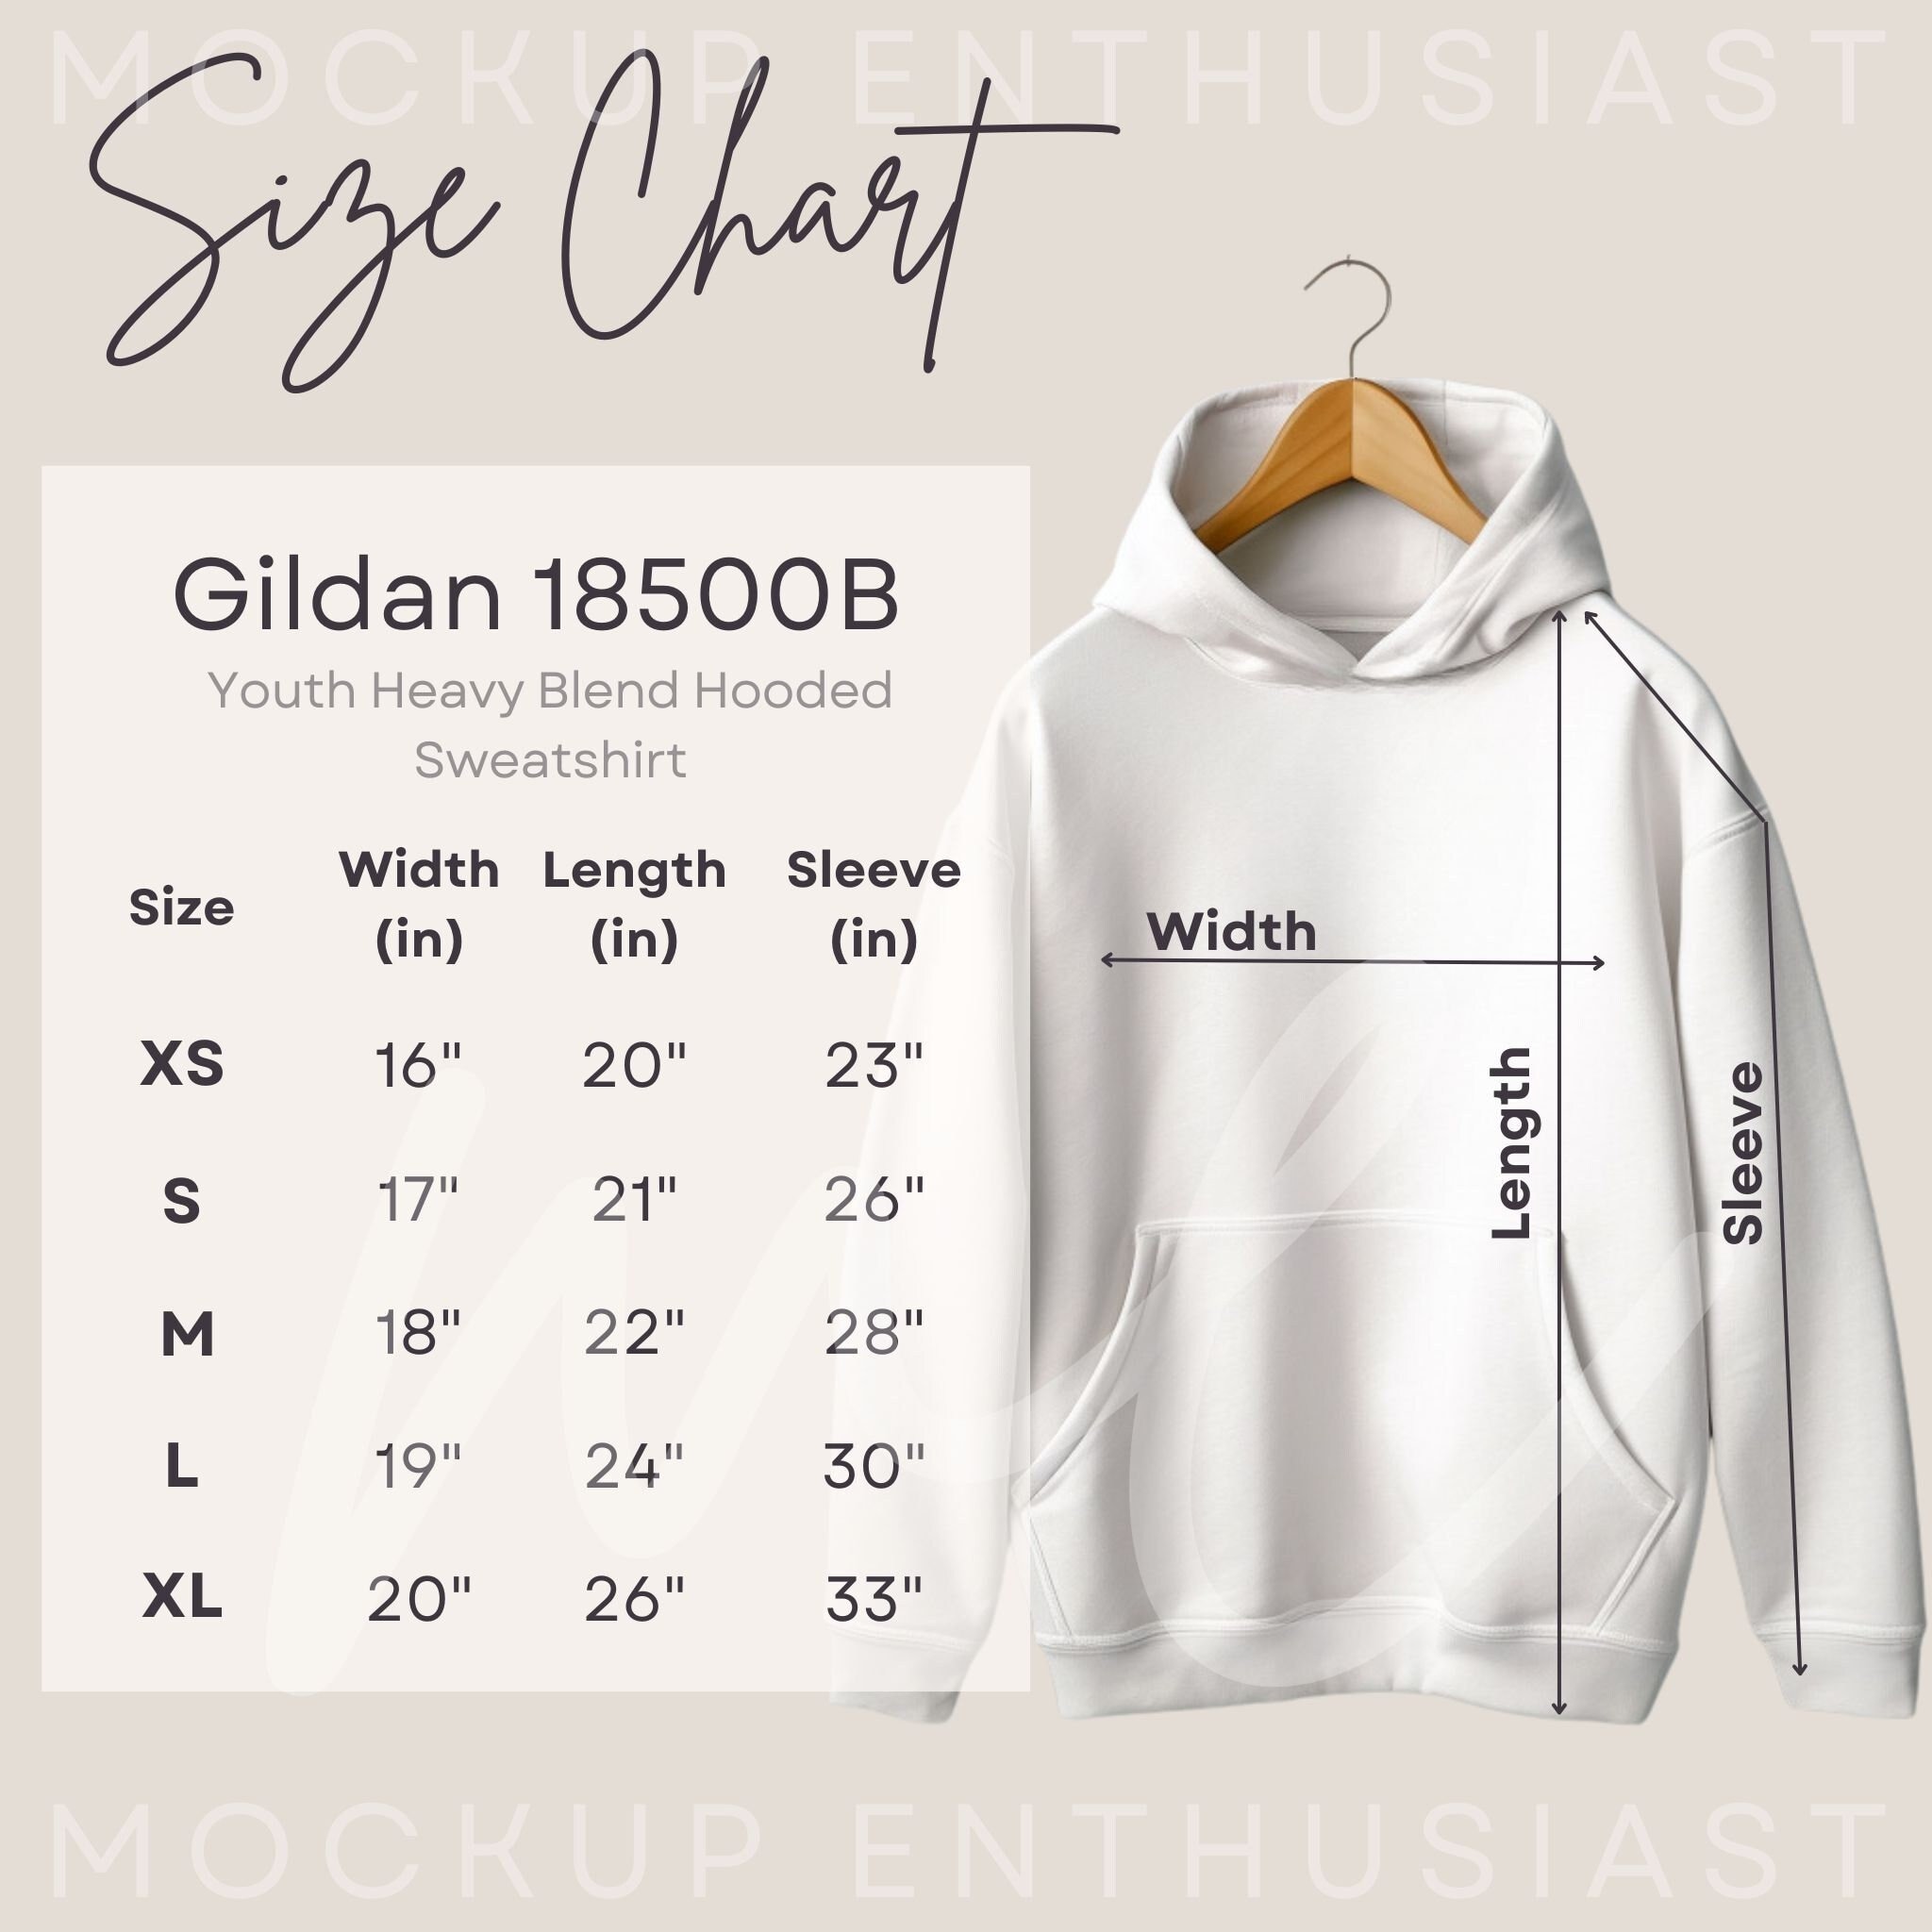 Gildan 18500B Size Chart Gildan Hoodie Size Chart 18500B Gildan Size ...